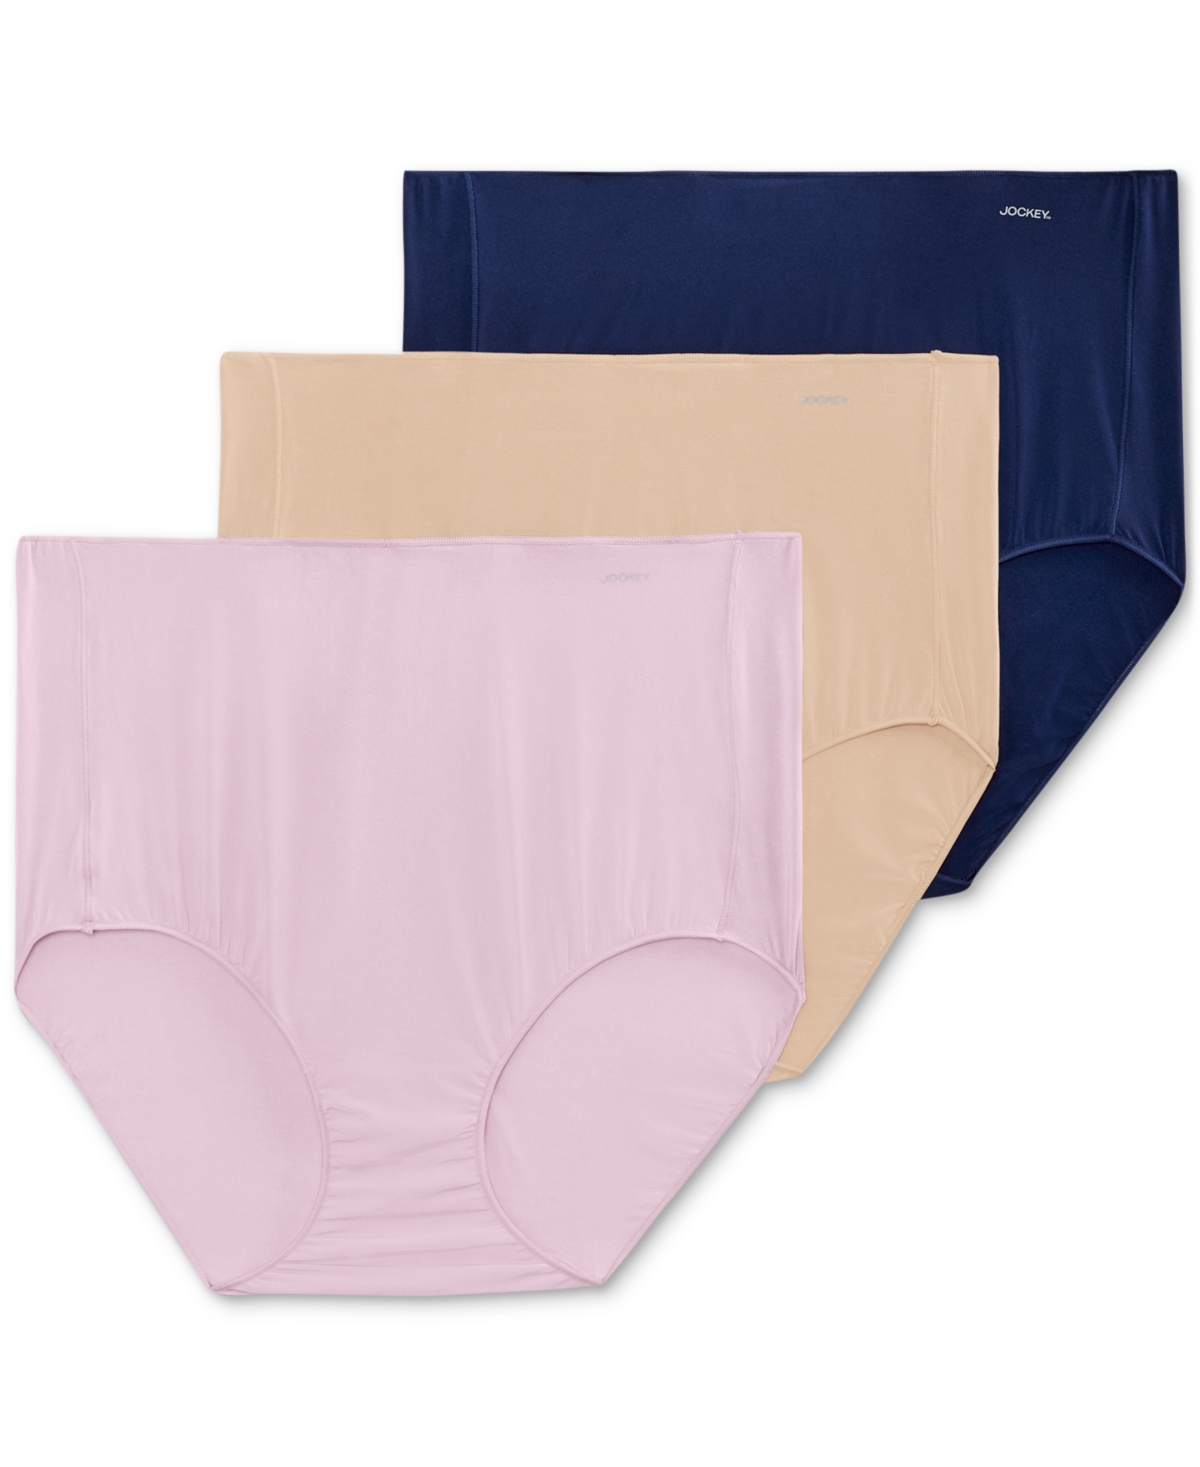 Womens' 3-Pk. No Panty Line Promise Tactel Brief Underwear 1877 - Light/mauve/jpm